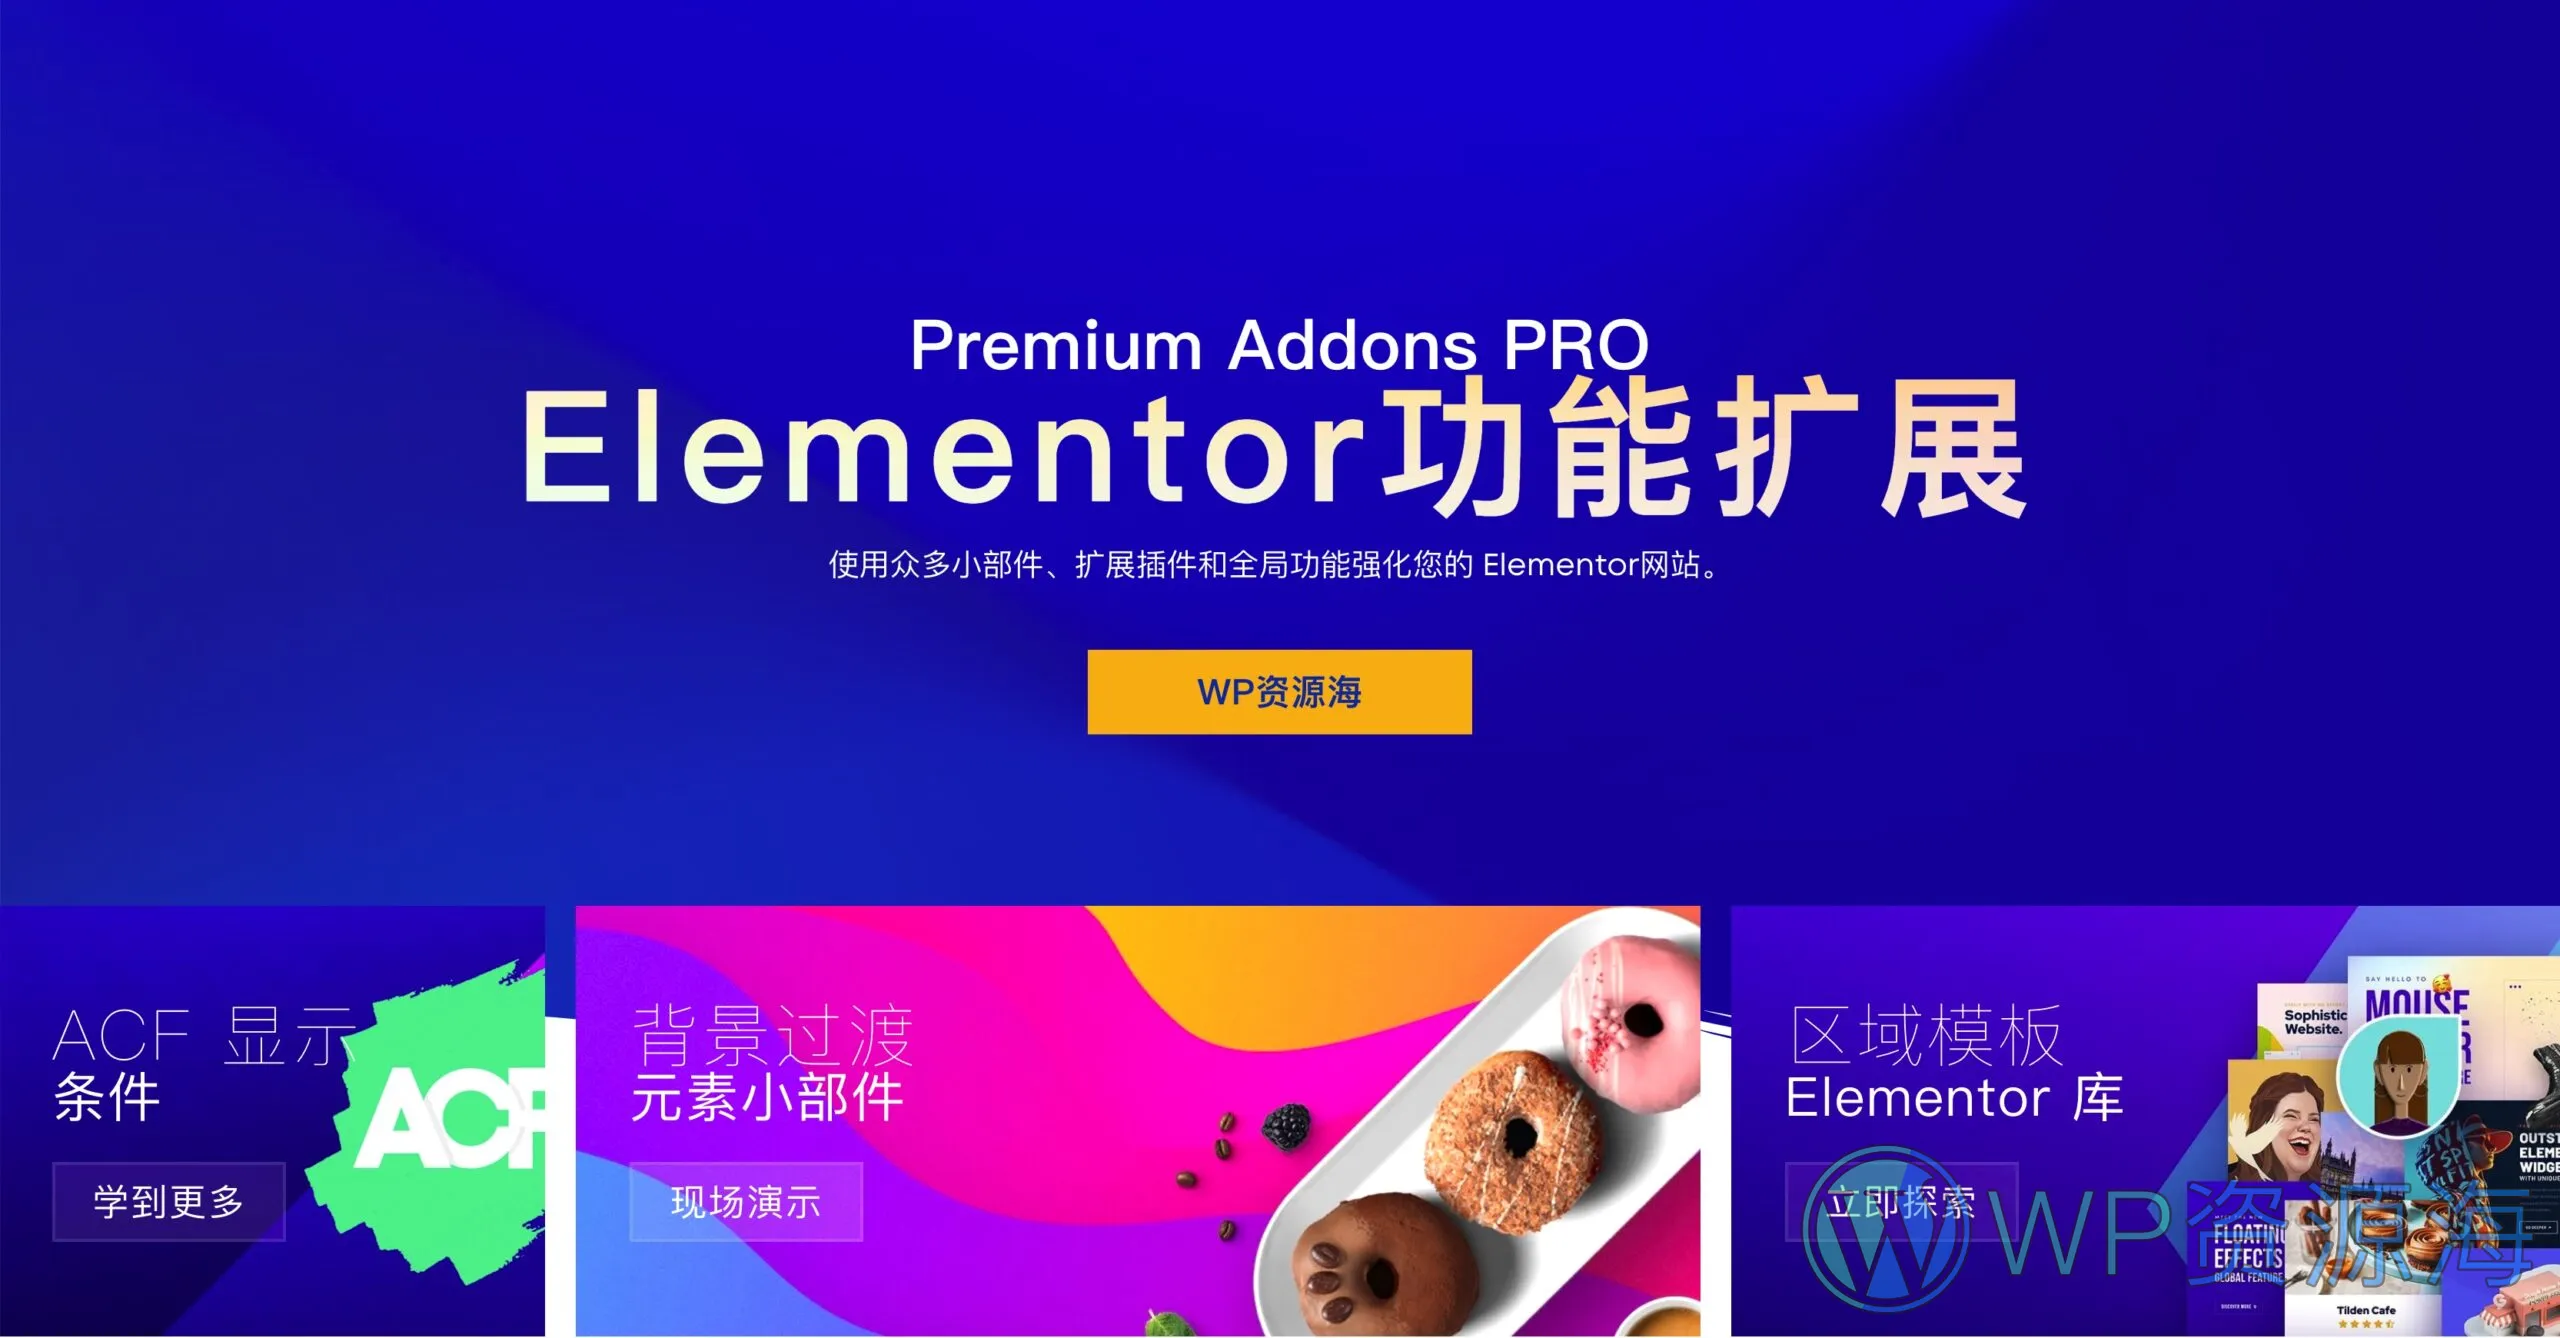 Premium Addons PRO v2.9.14 Elementor高级功能扩展插件插图-WordPress资源海